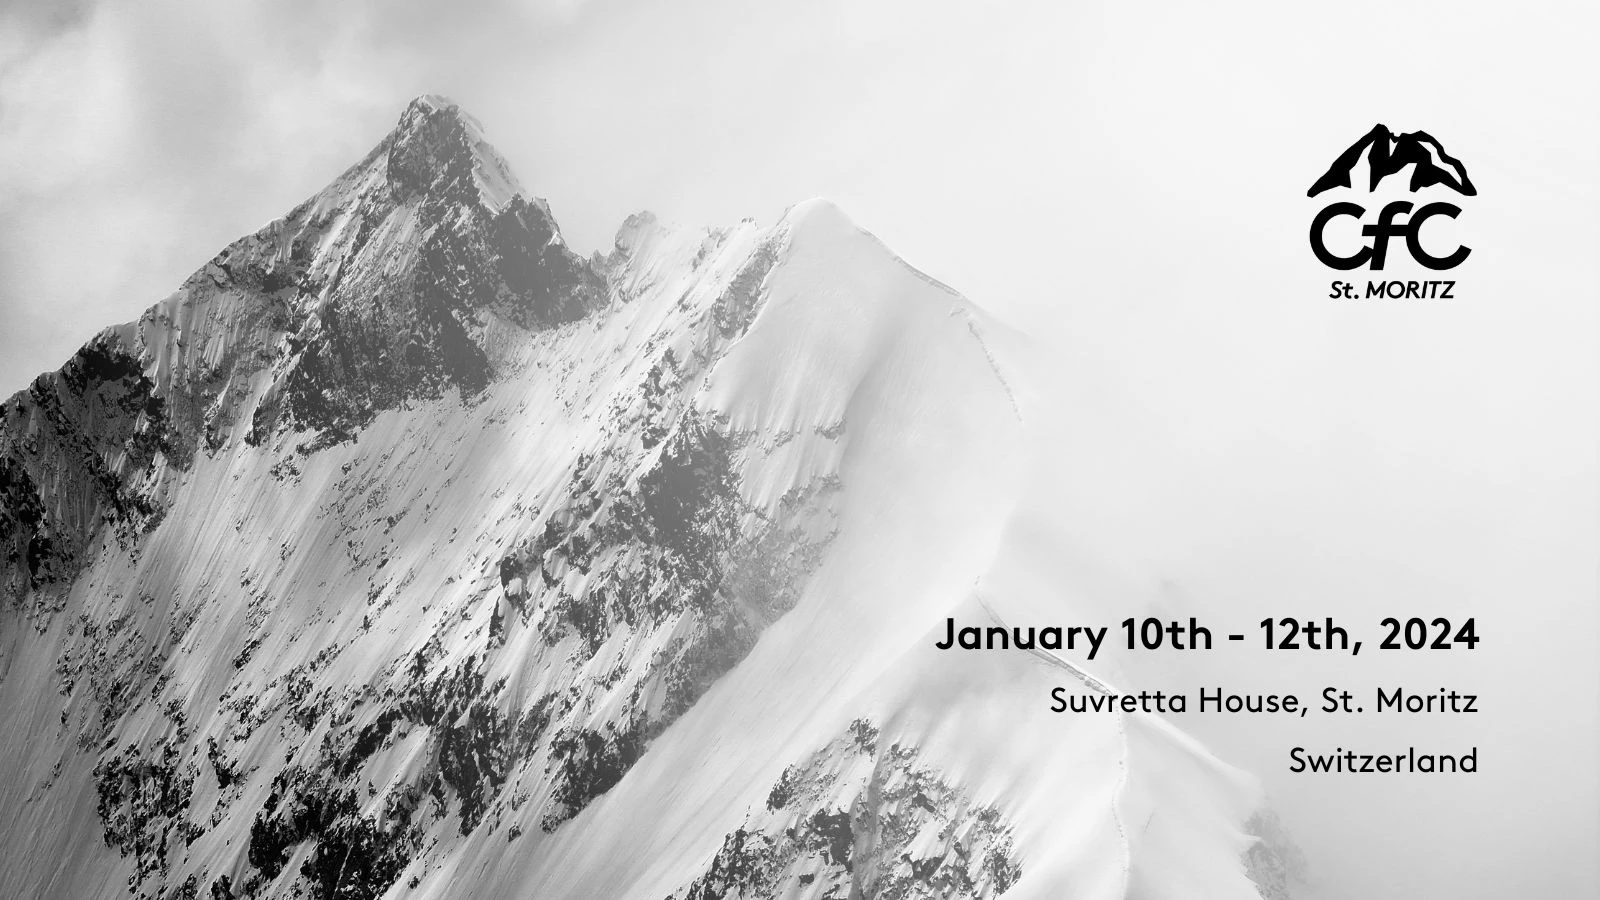 CfC St. Moritz 2024: Unites Global Finance Leaders in Swiss Alps